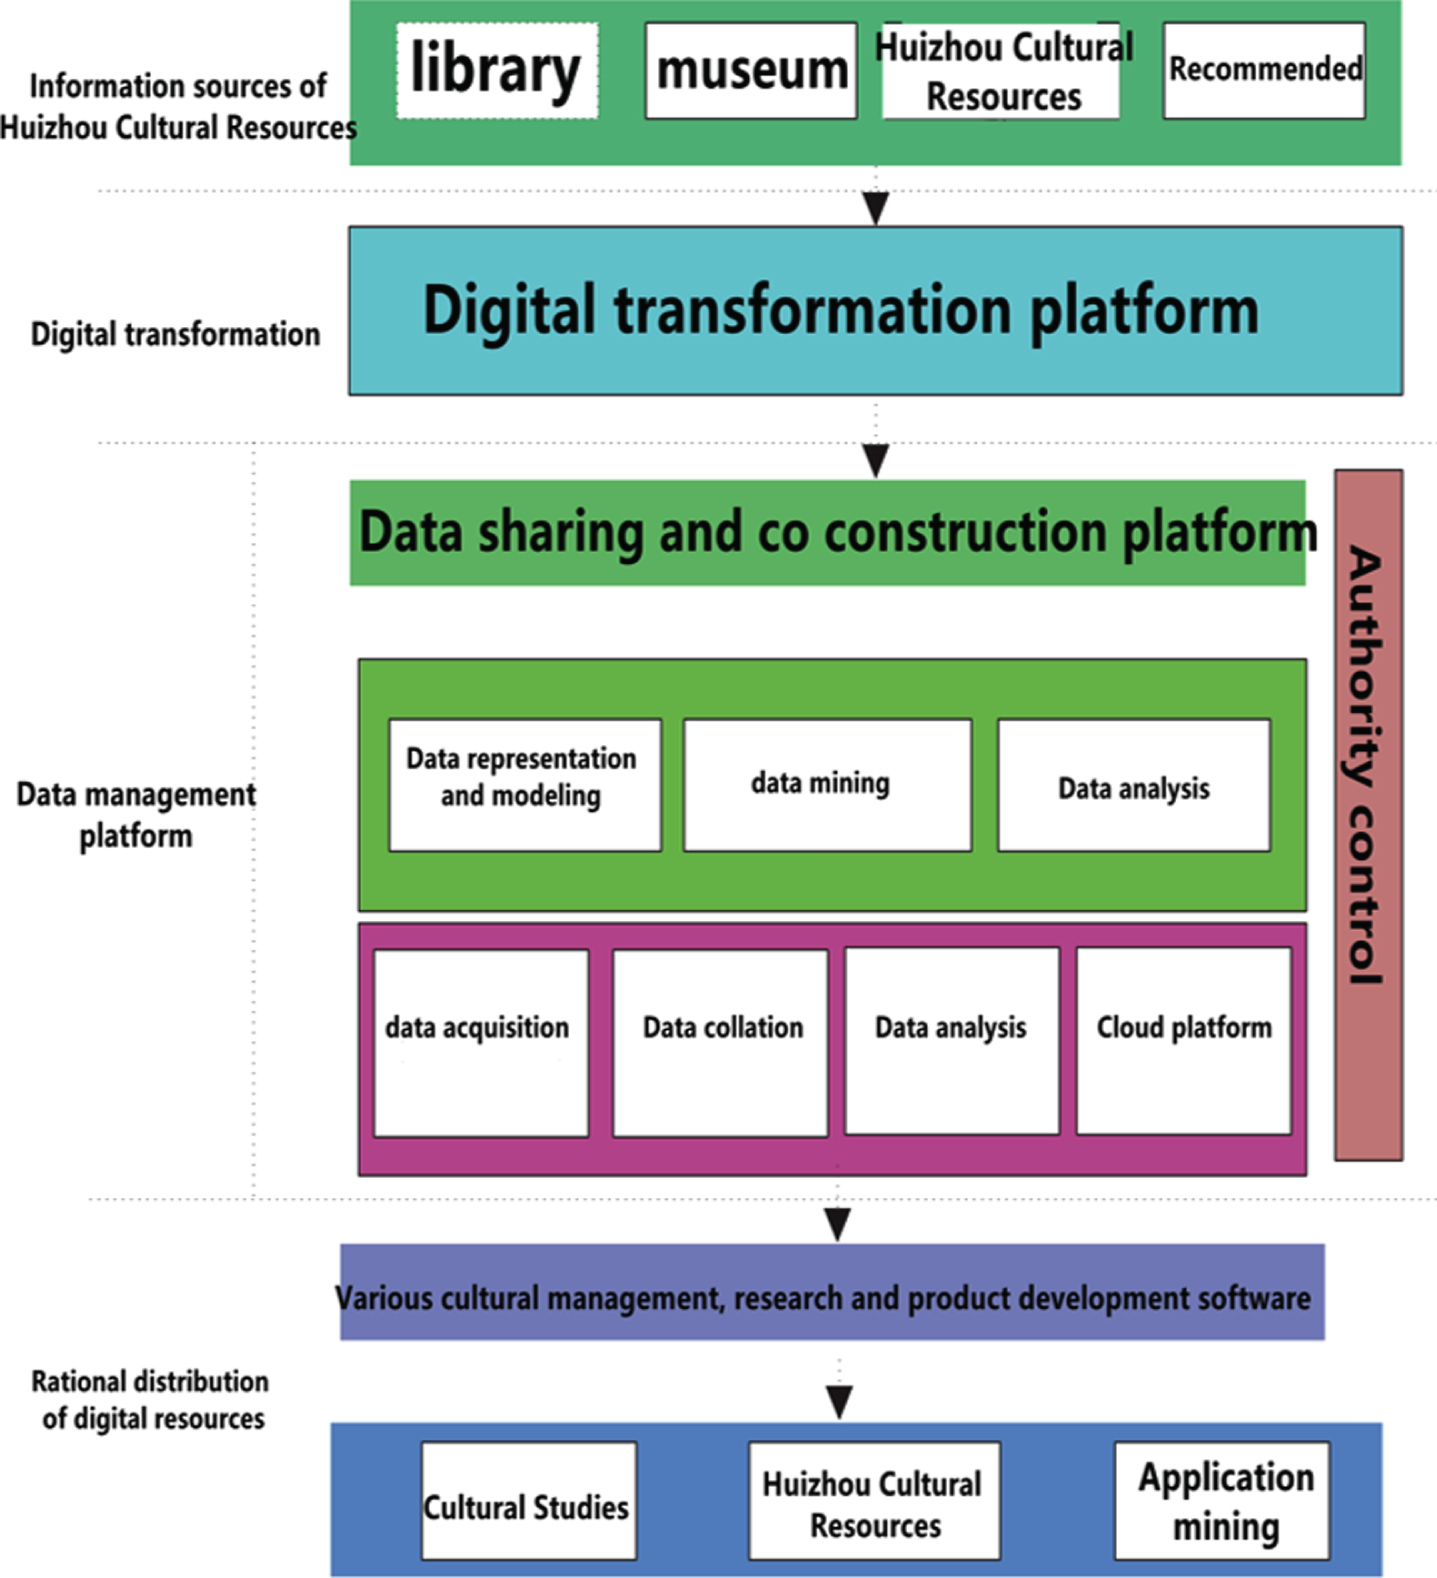 Basic framework of data management platform.